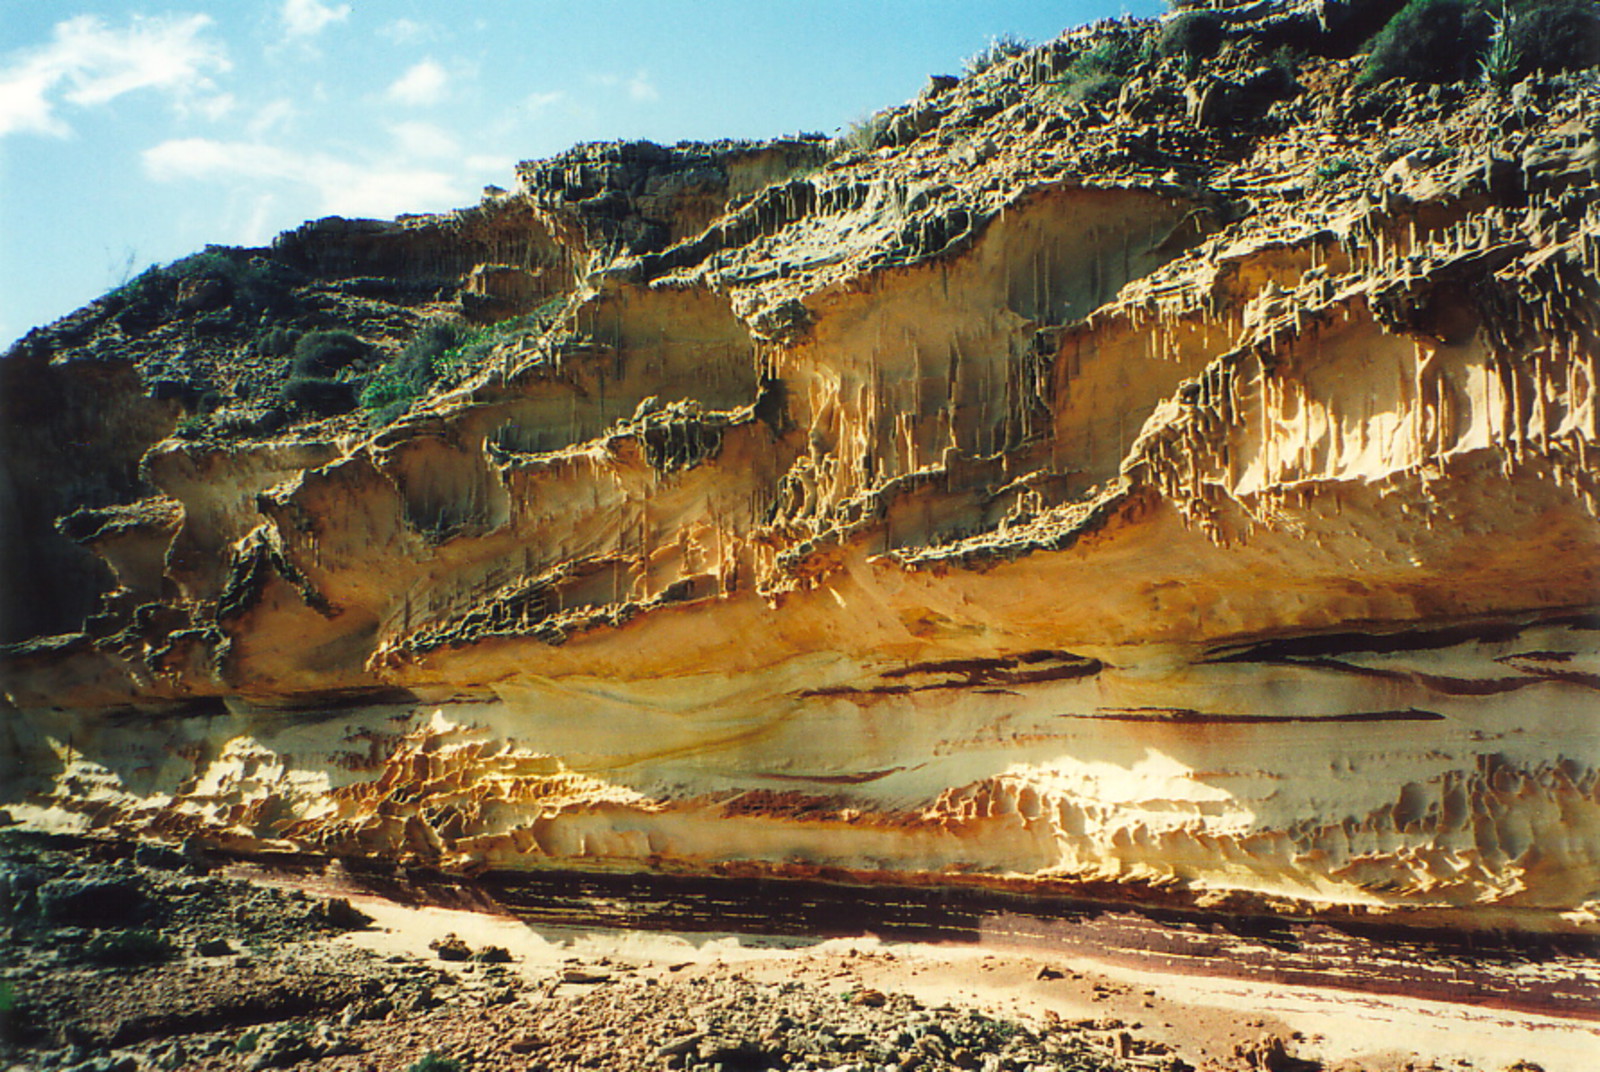 Sandstone cliffs on the Kalbarri coast